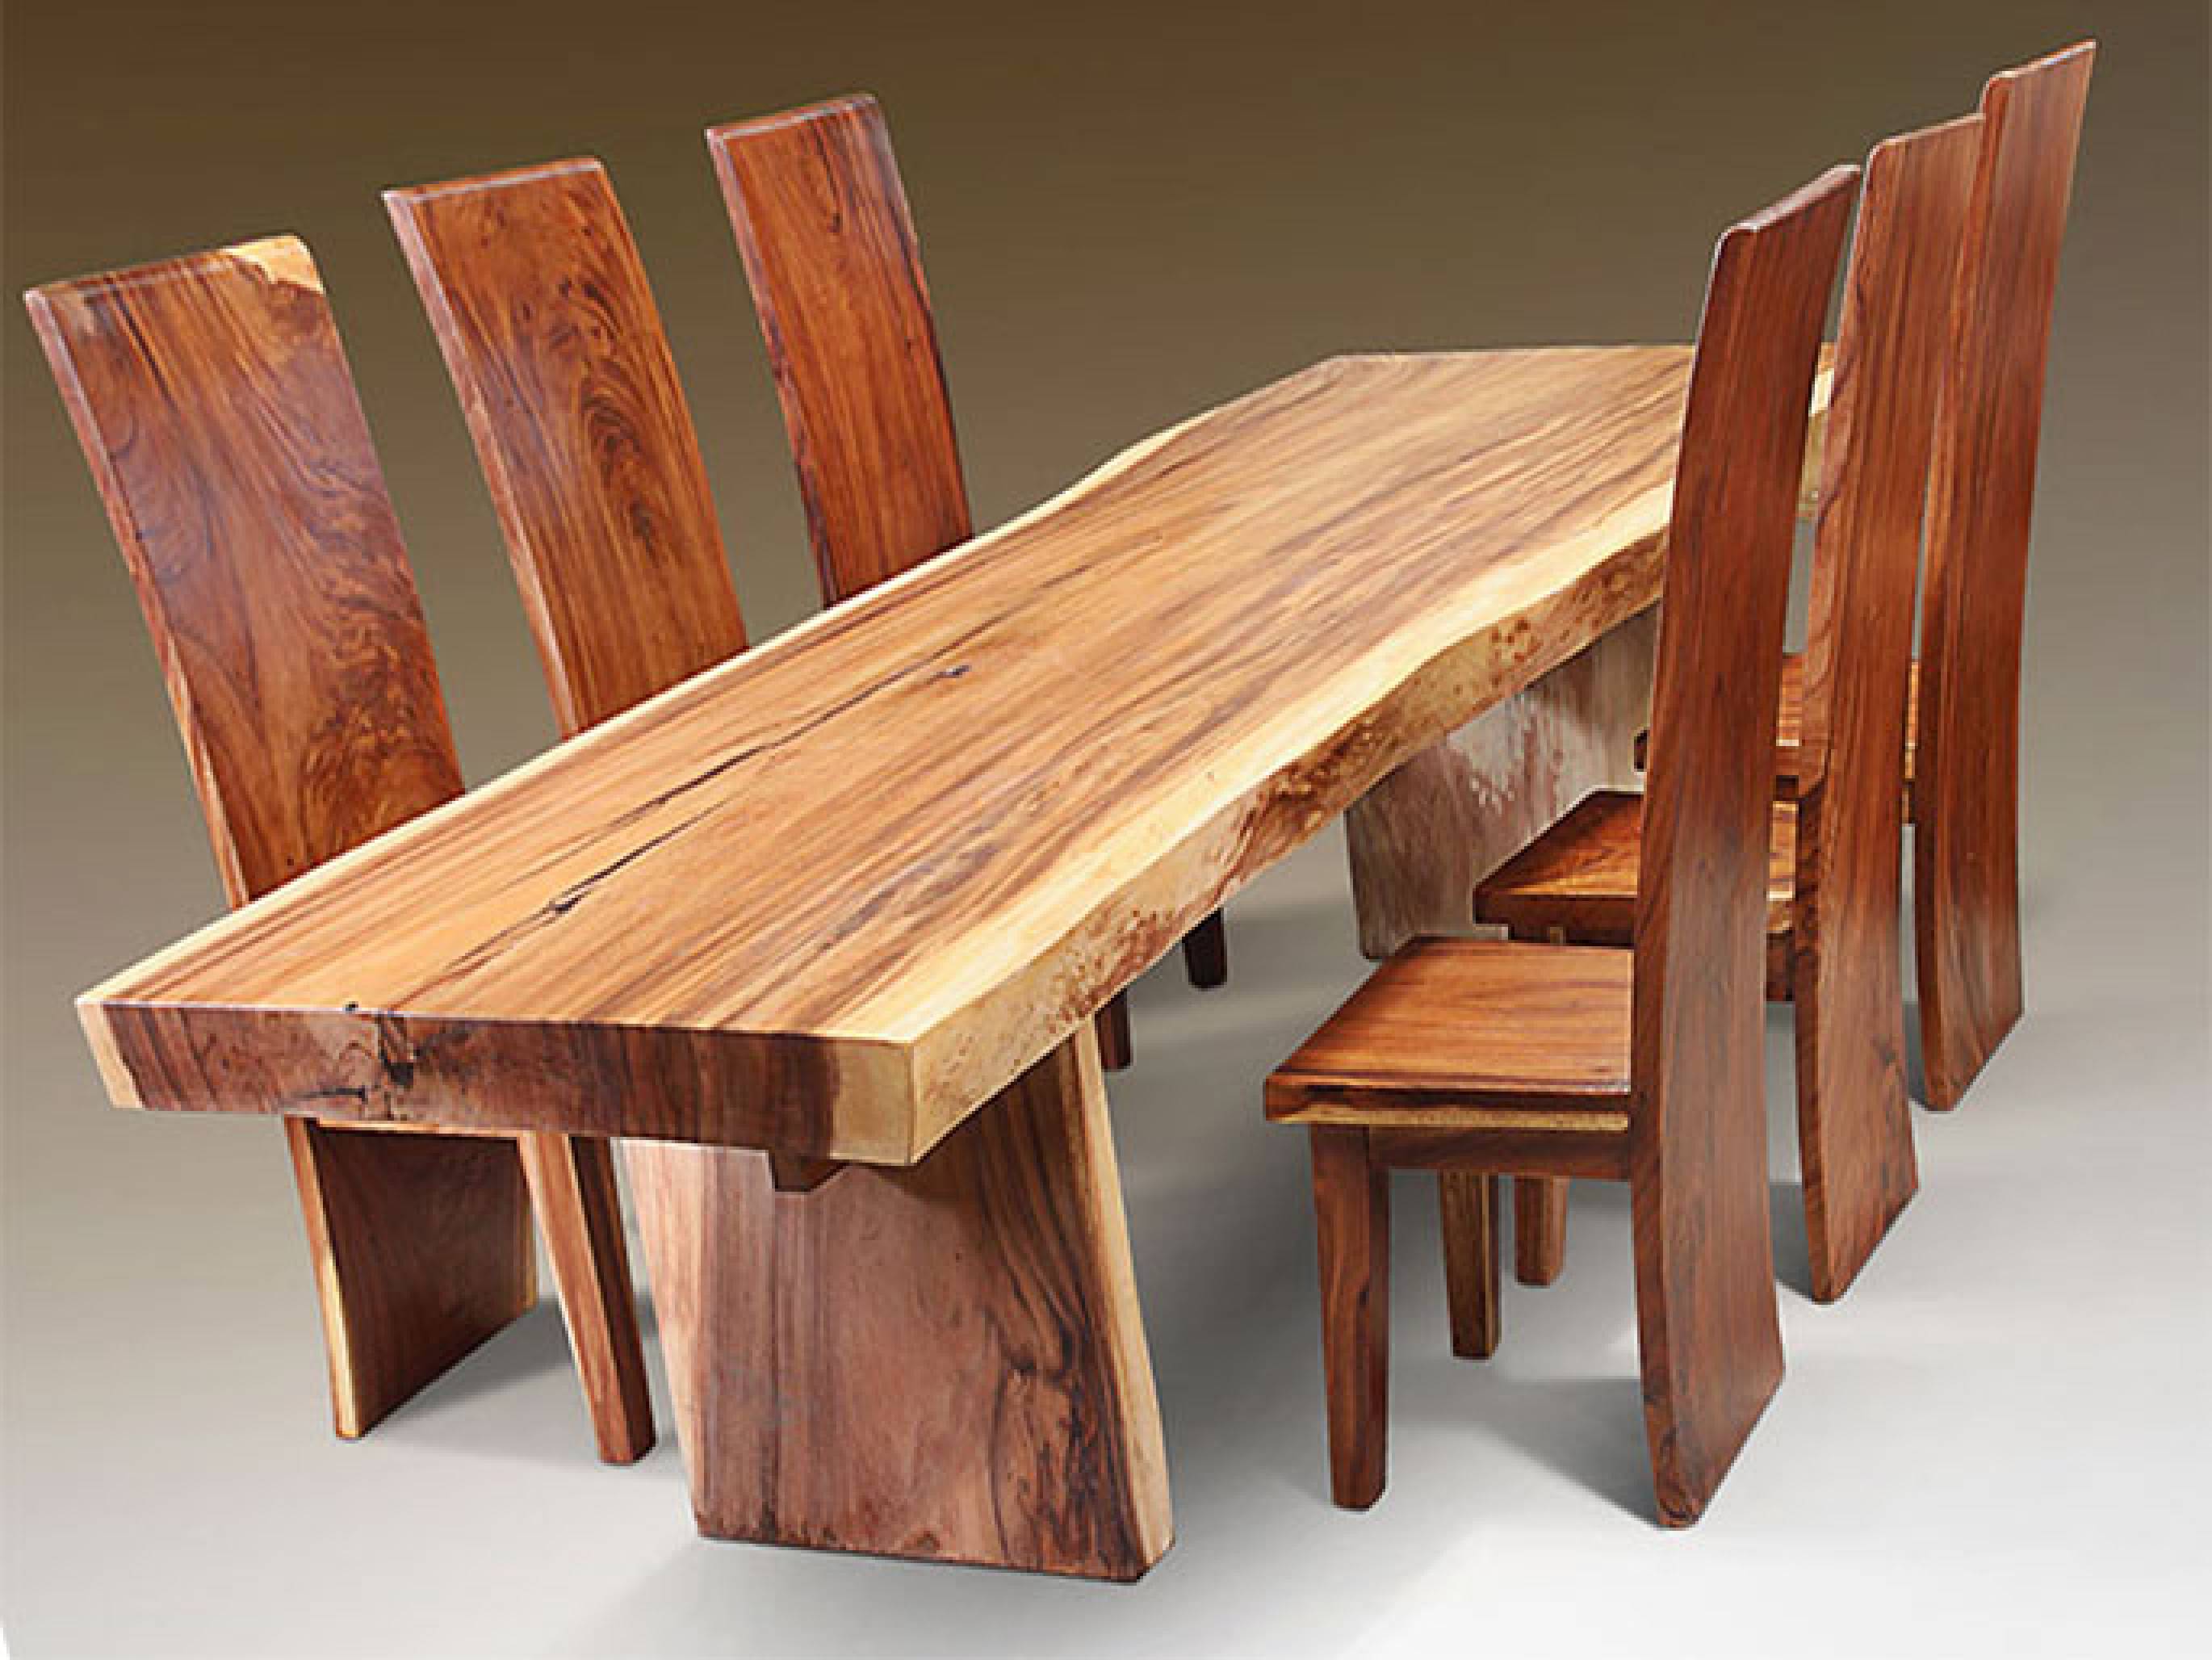 IPE Wood Furniture.